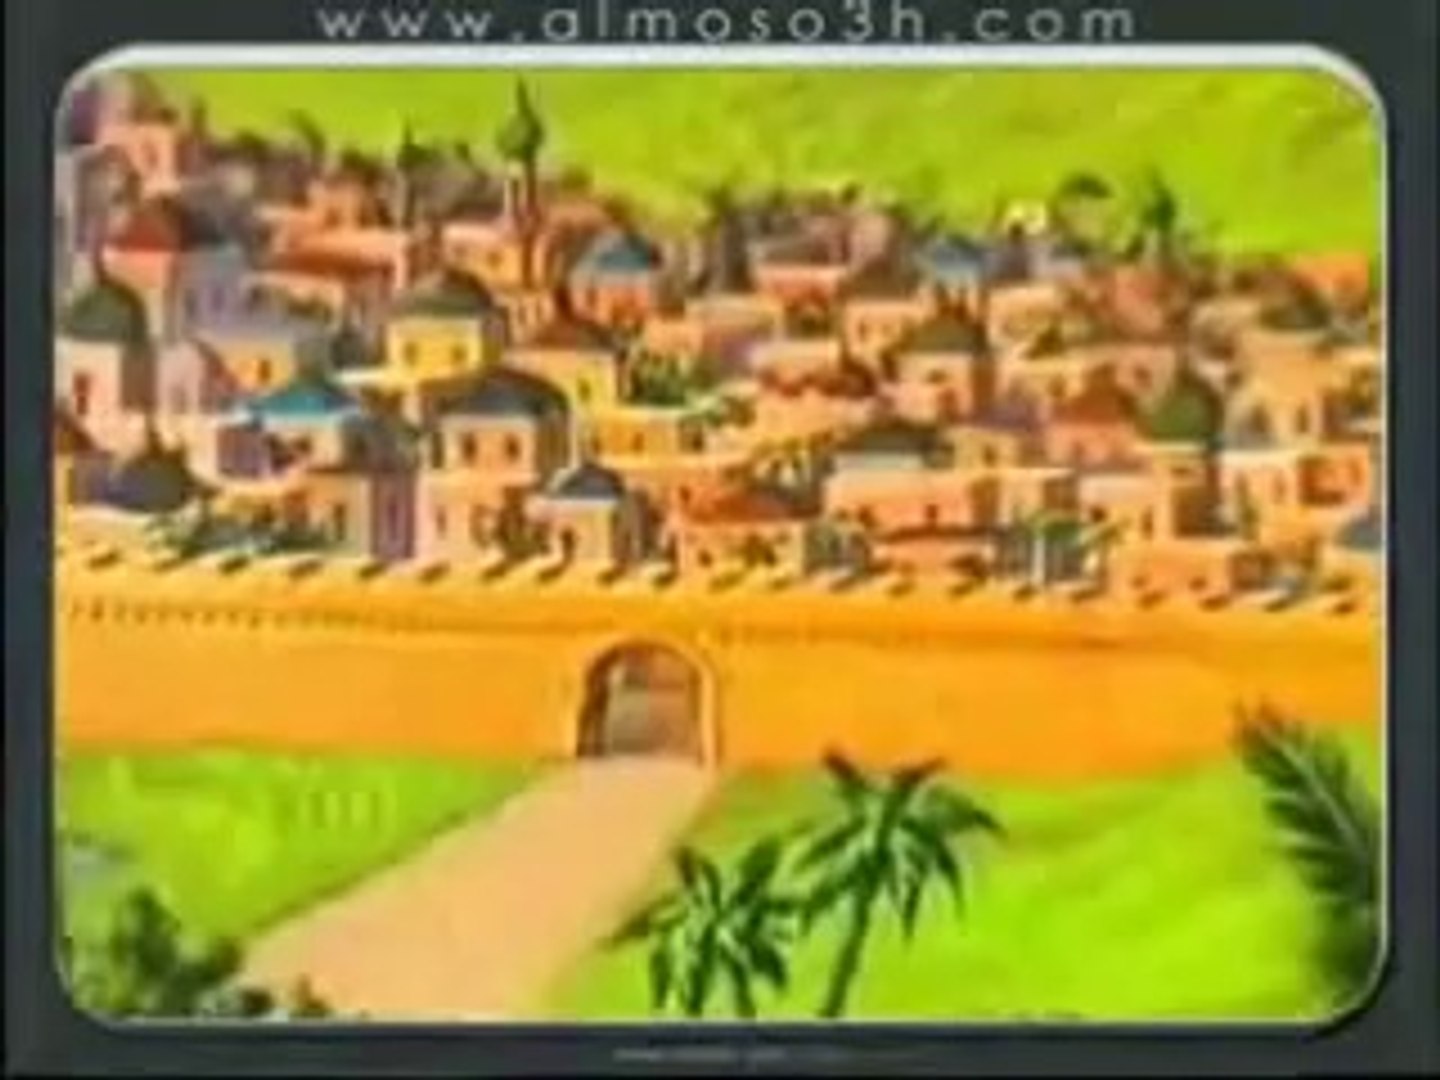 علي بابا فيلم كرتون إسلامي بدون موسيقى - video Dailymotion